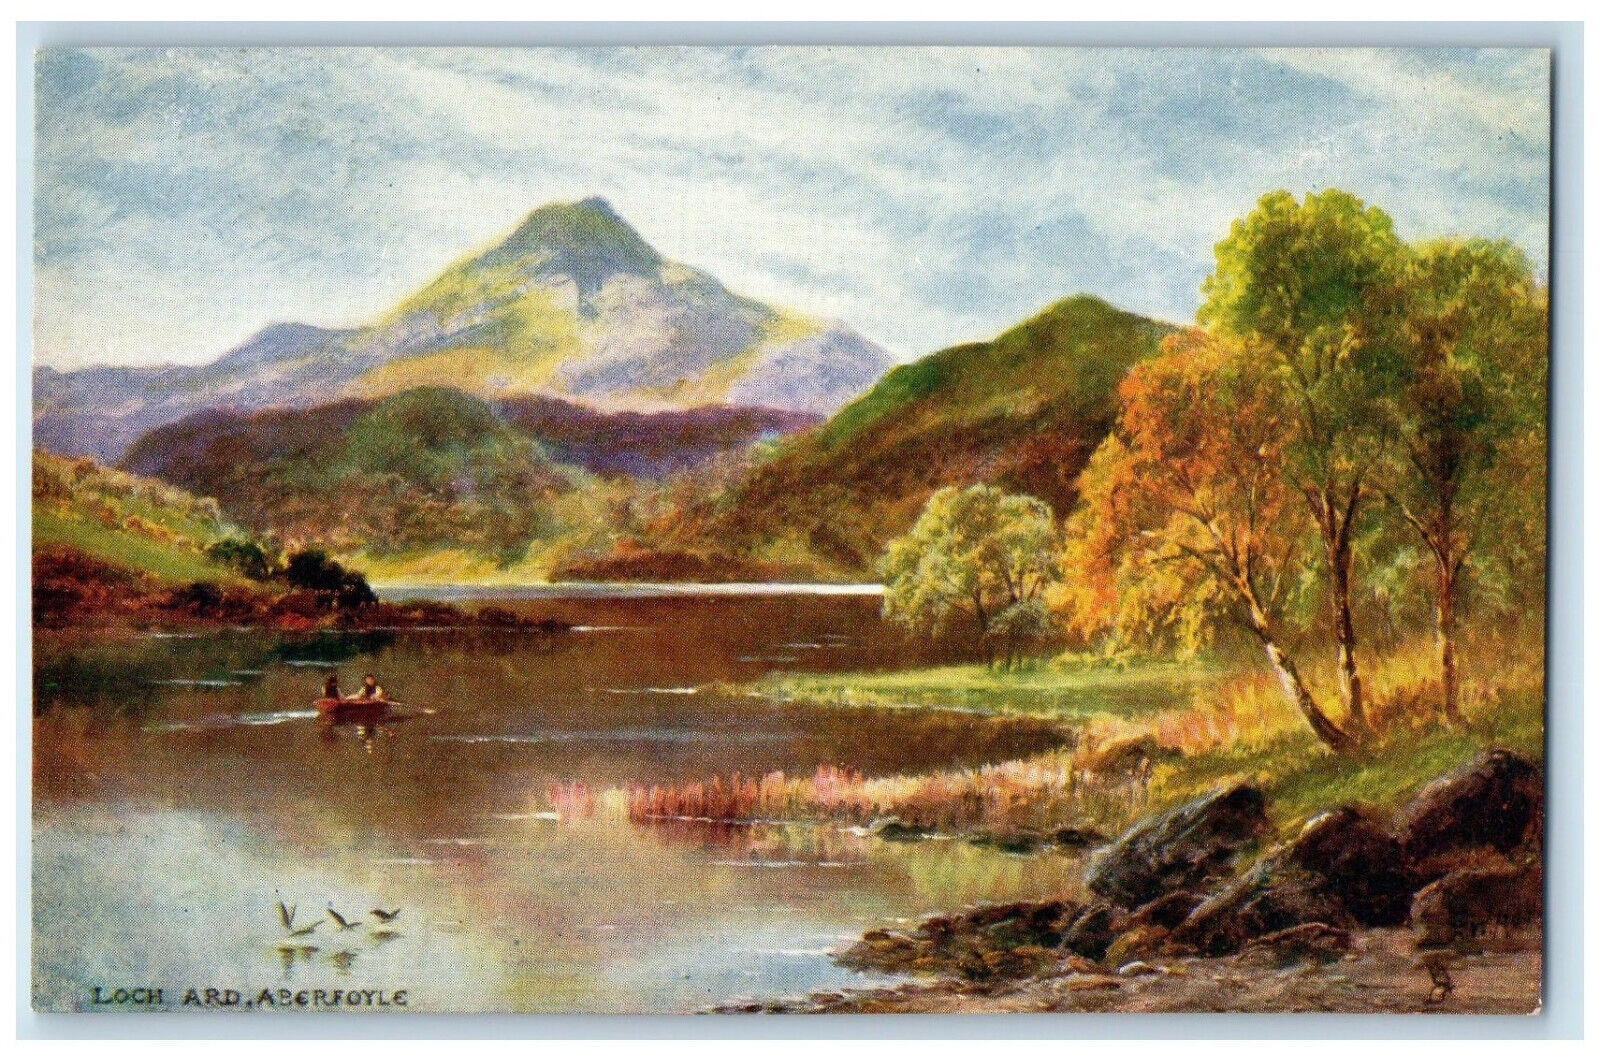 c1910 Loch Ard Aberfoyle Boating Trossachs Scotland Oilette Tuck Art Postcard